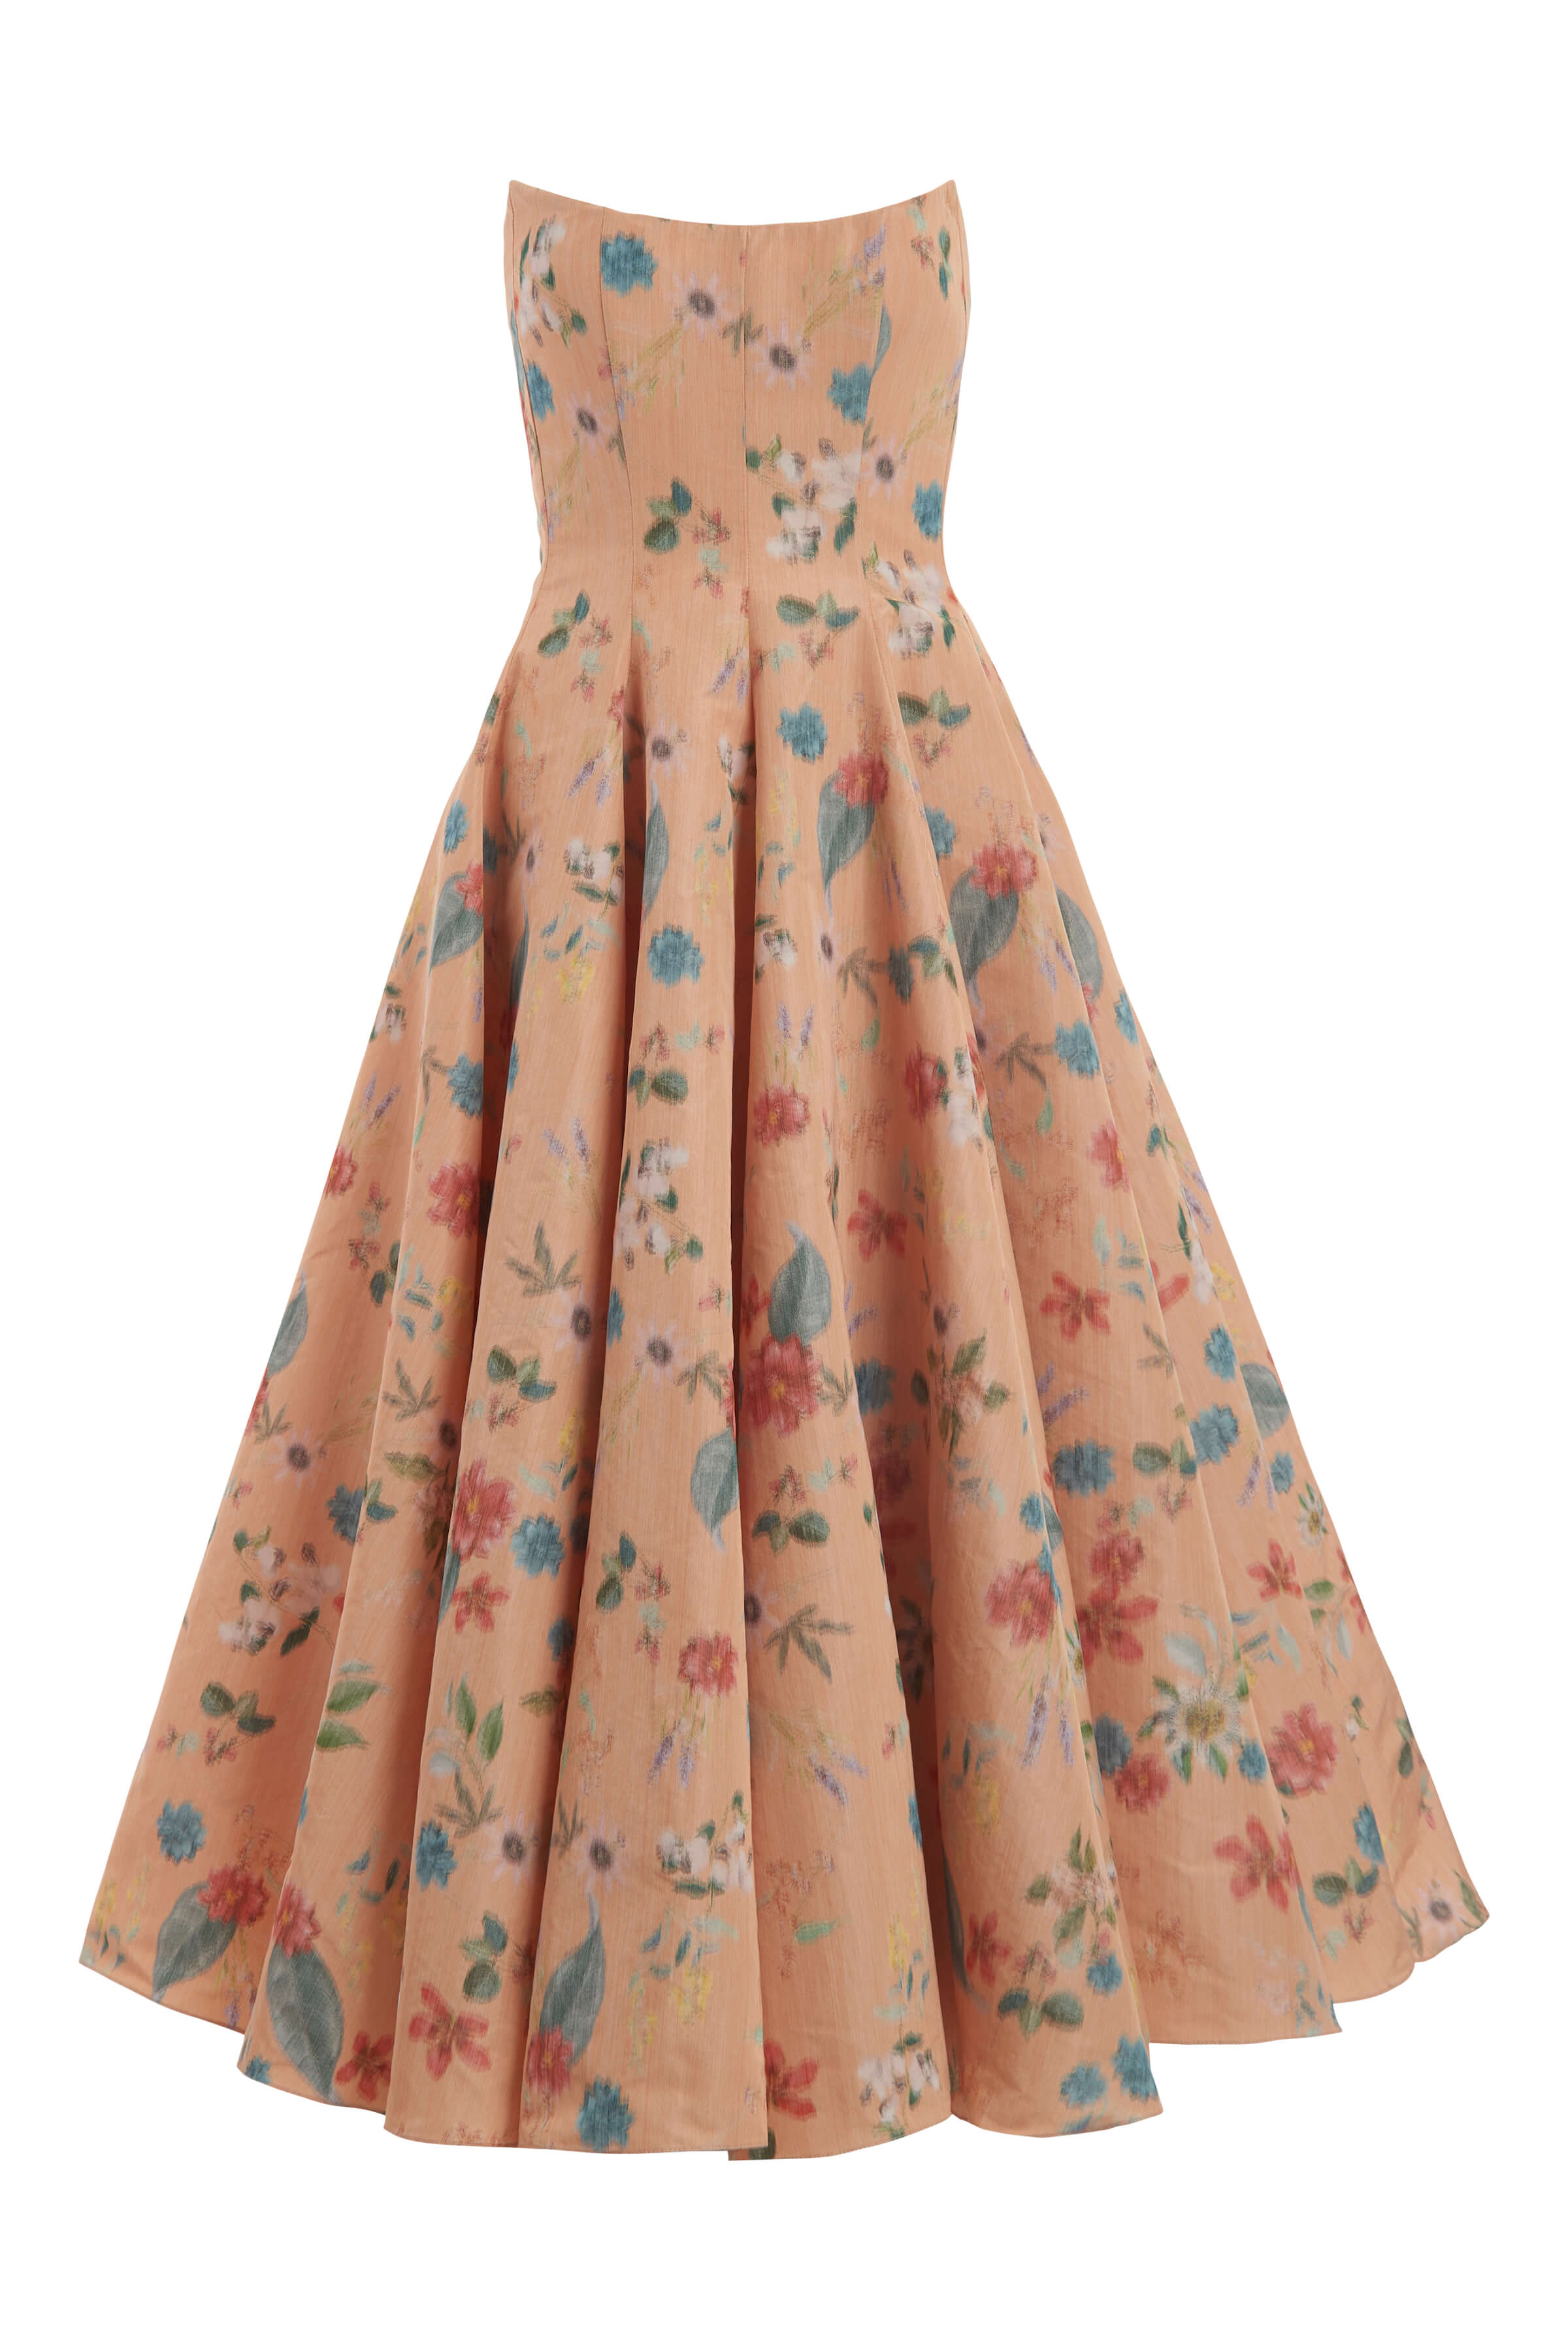 Rousseau Sherbet Floral Ikat Strapless Midi Dress